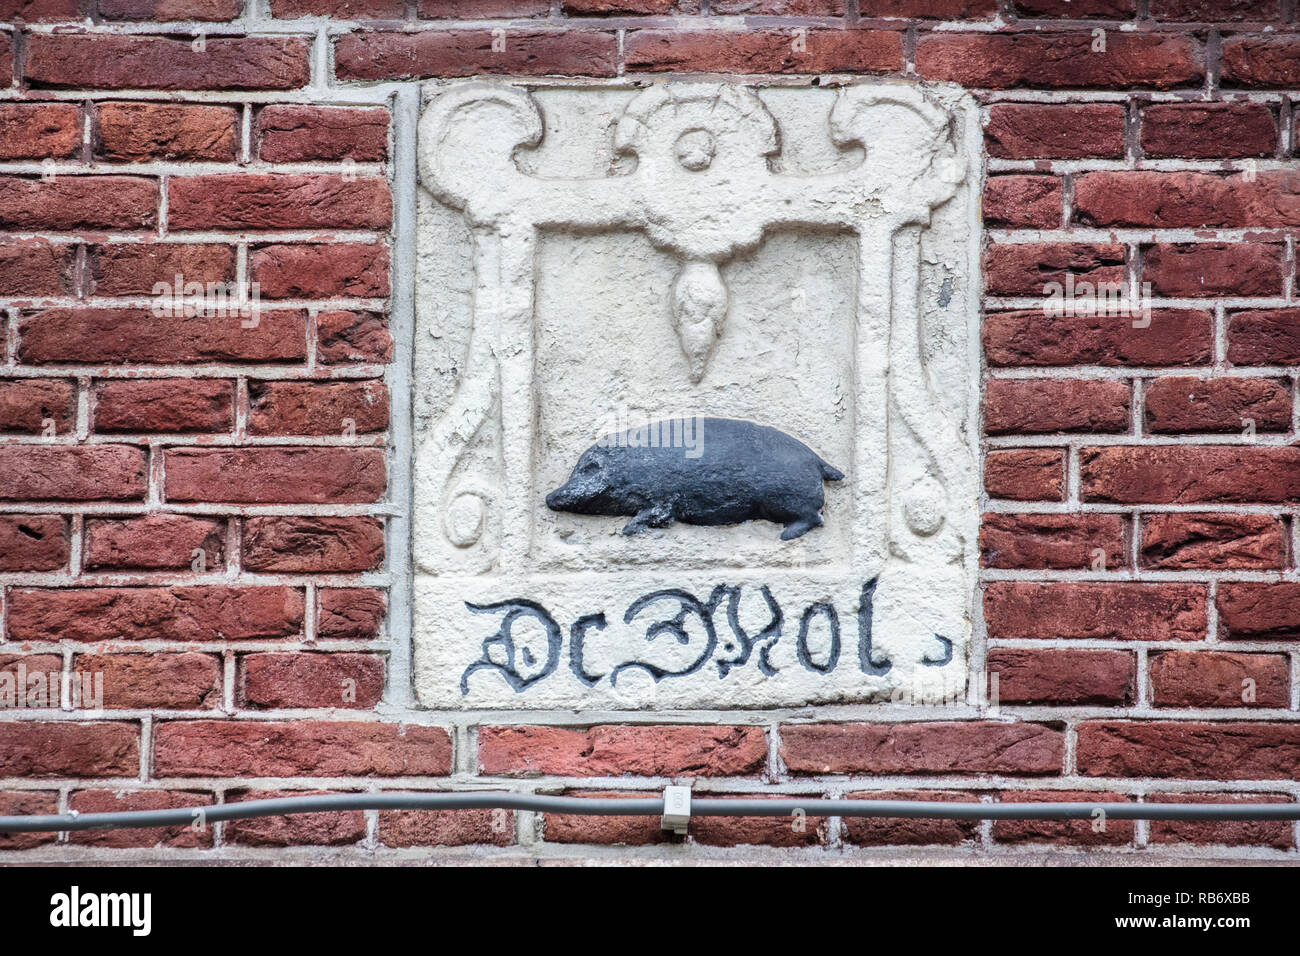 The Netherlands, Amsterdam, gable stone of pork. Stock Photo